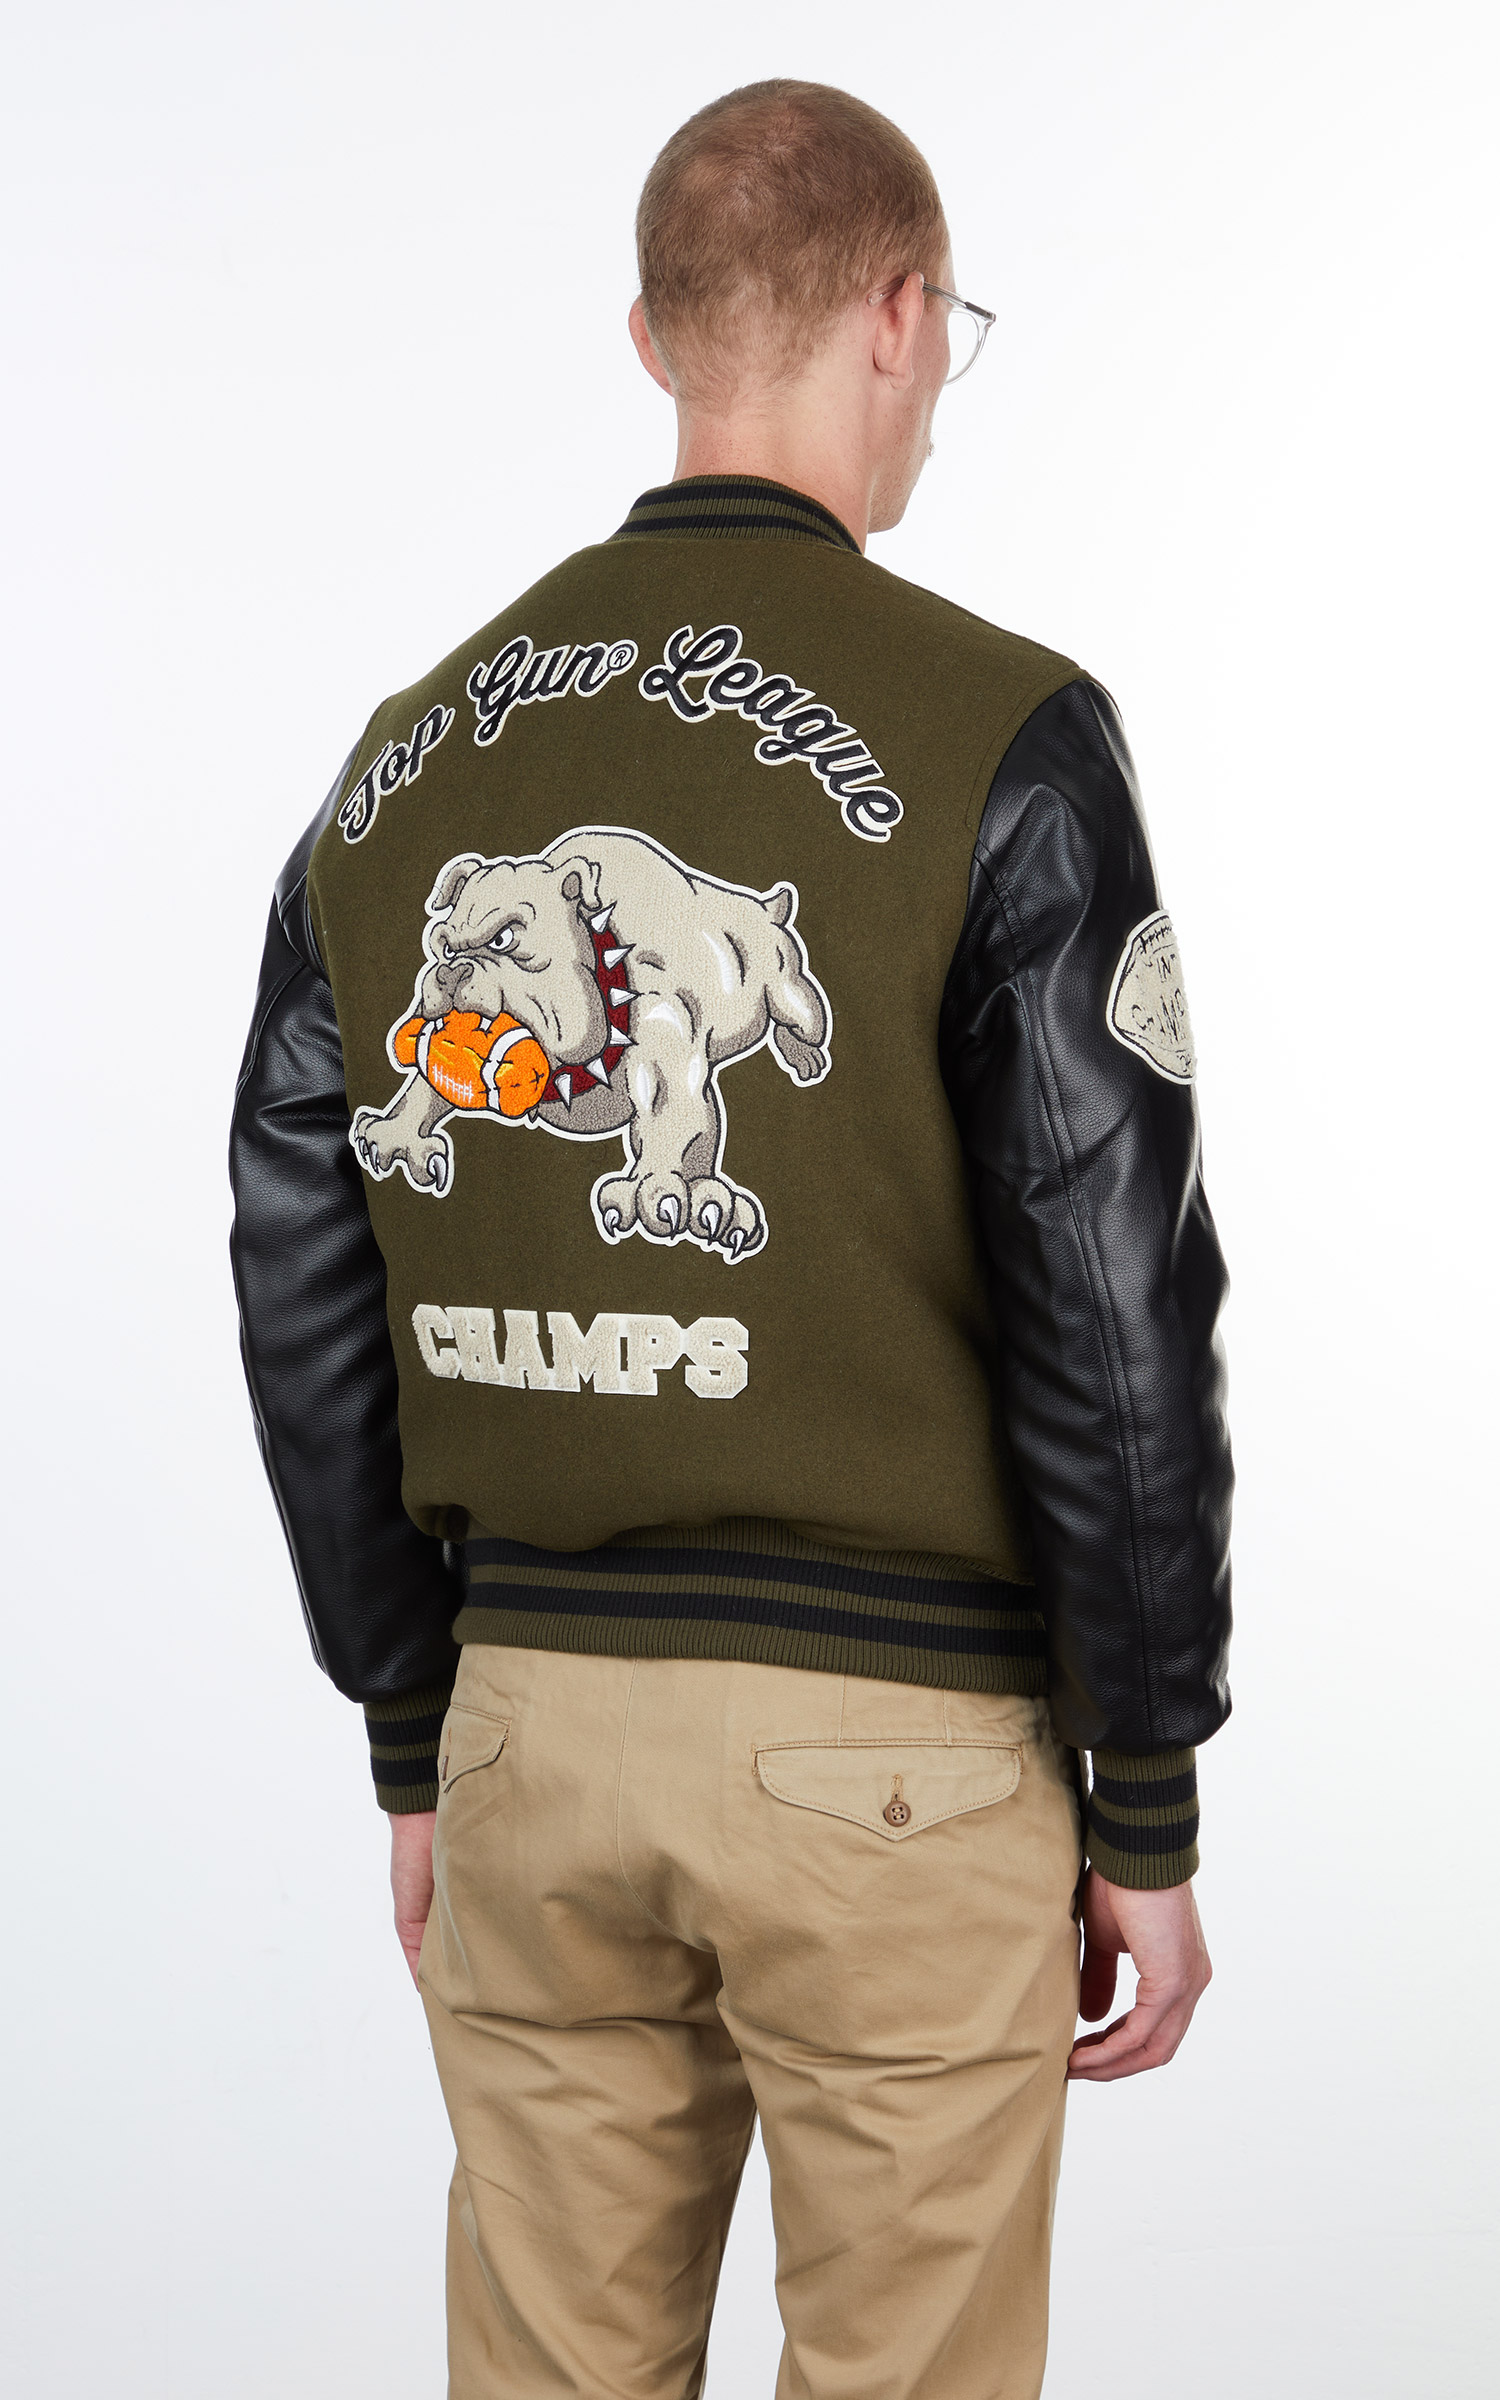 Top Gun Military Brothers Varsity Jacket